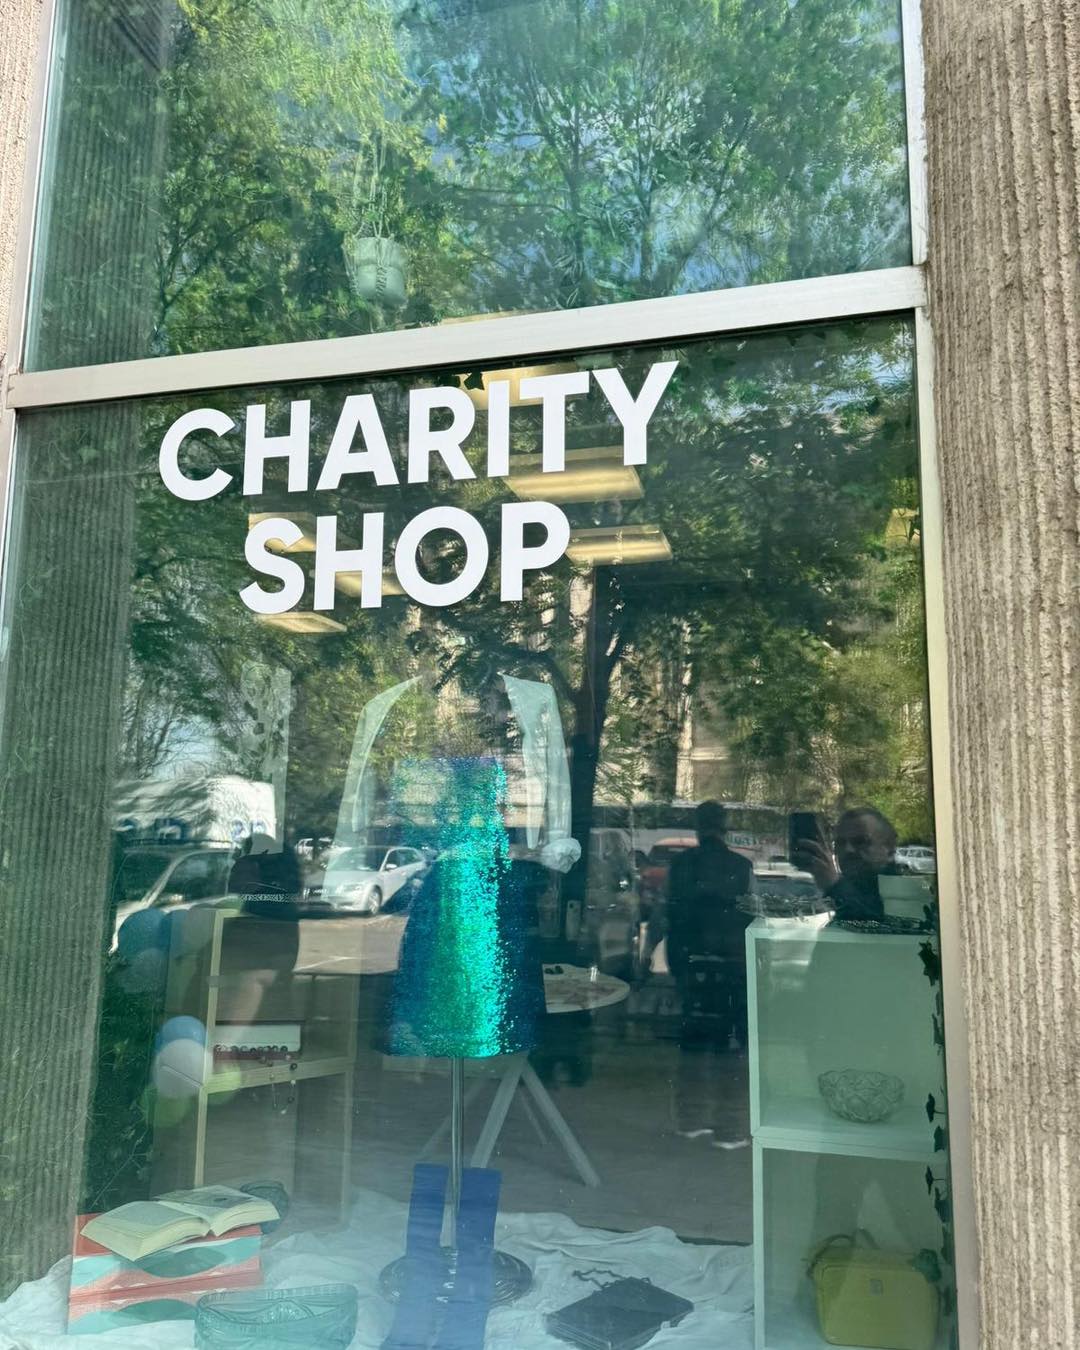 Bucharest City Hall opens charity shop